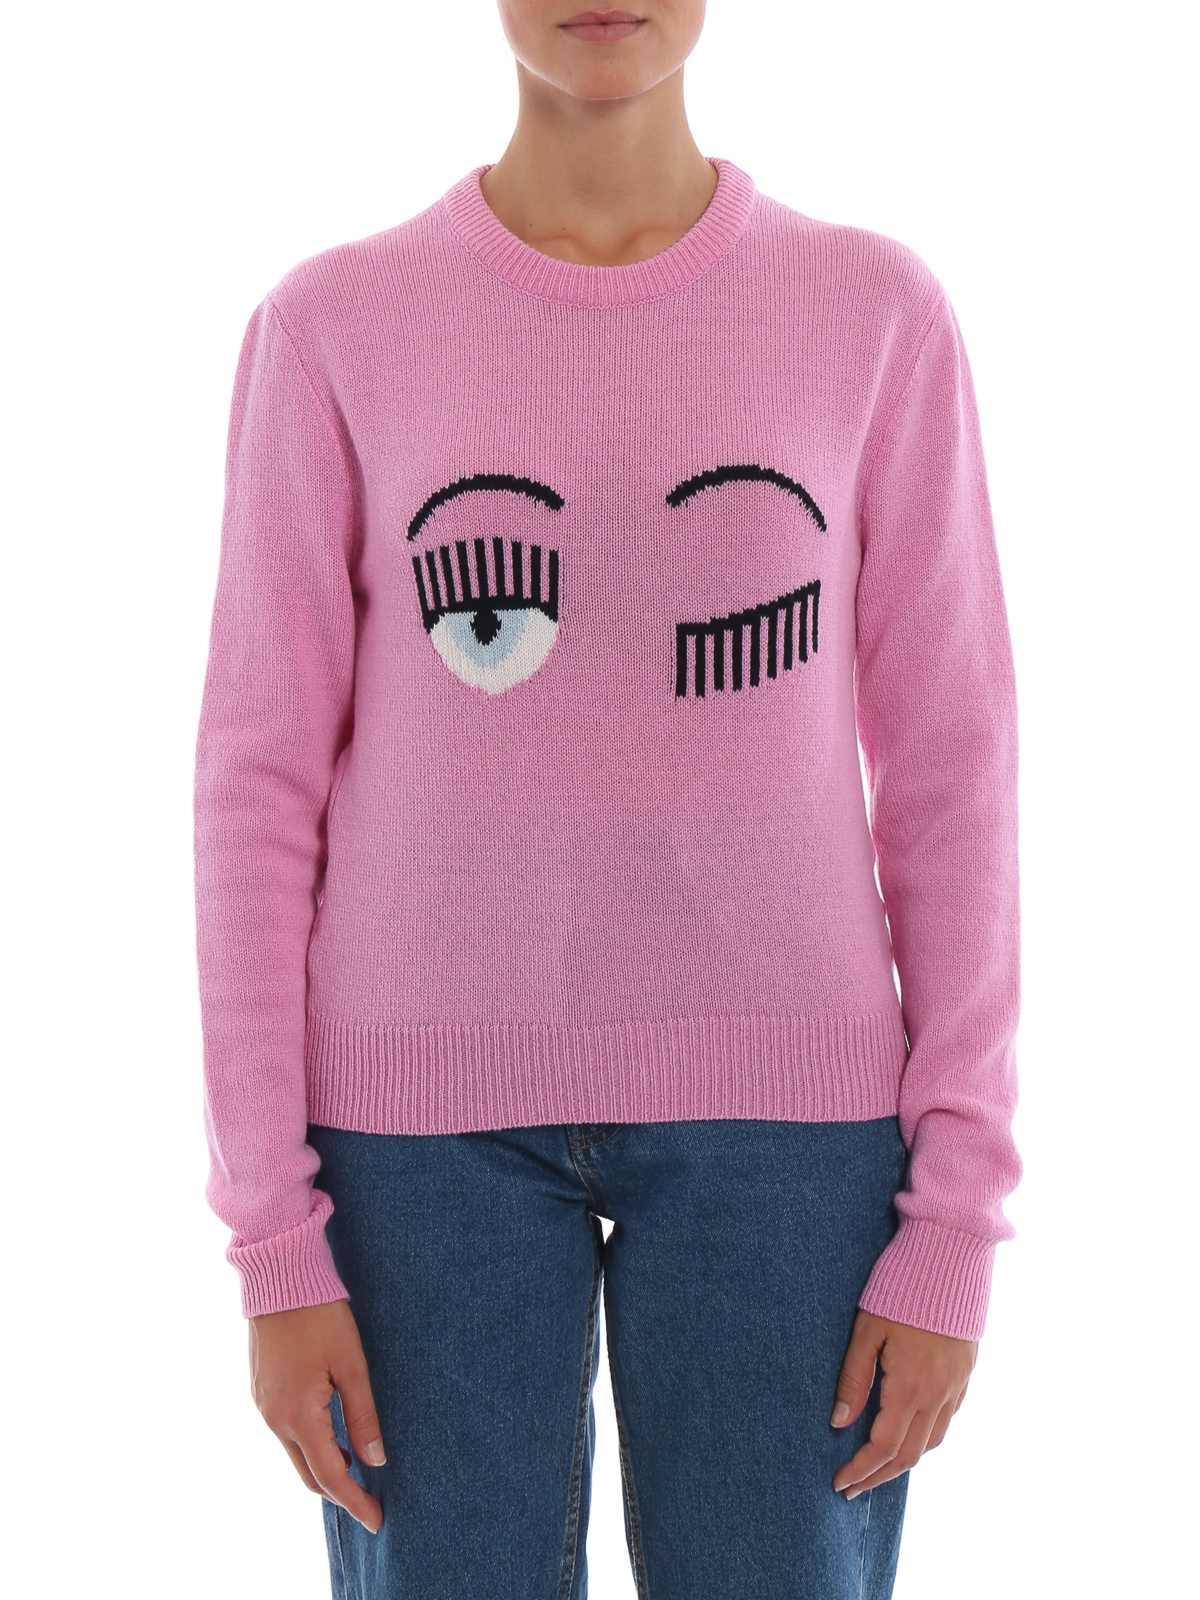 Scorch Multiplication Assimilation Crew necks Chiara Ferragni - Flirting pink merino wool sweater -  18AICFJM0182